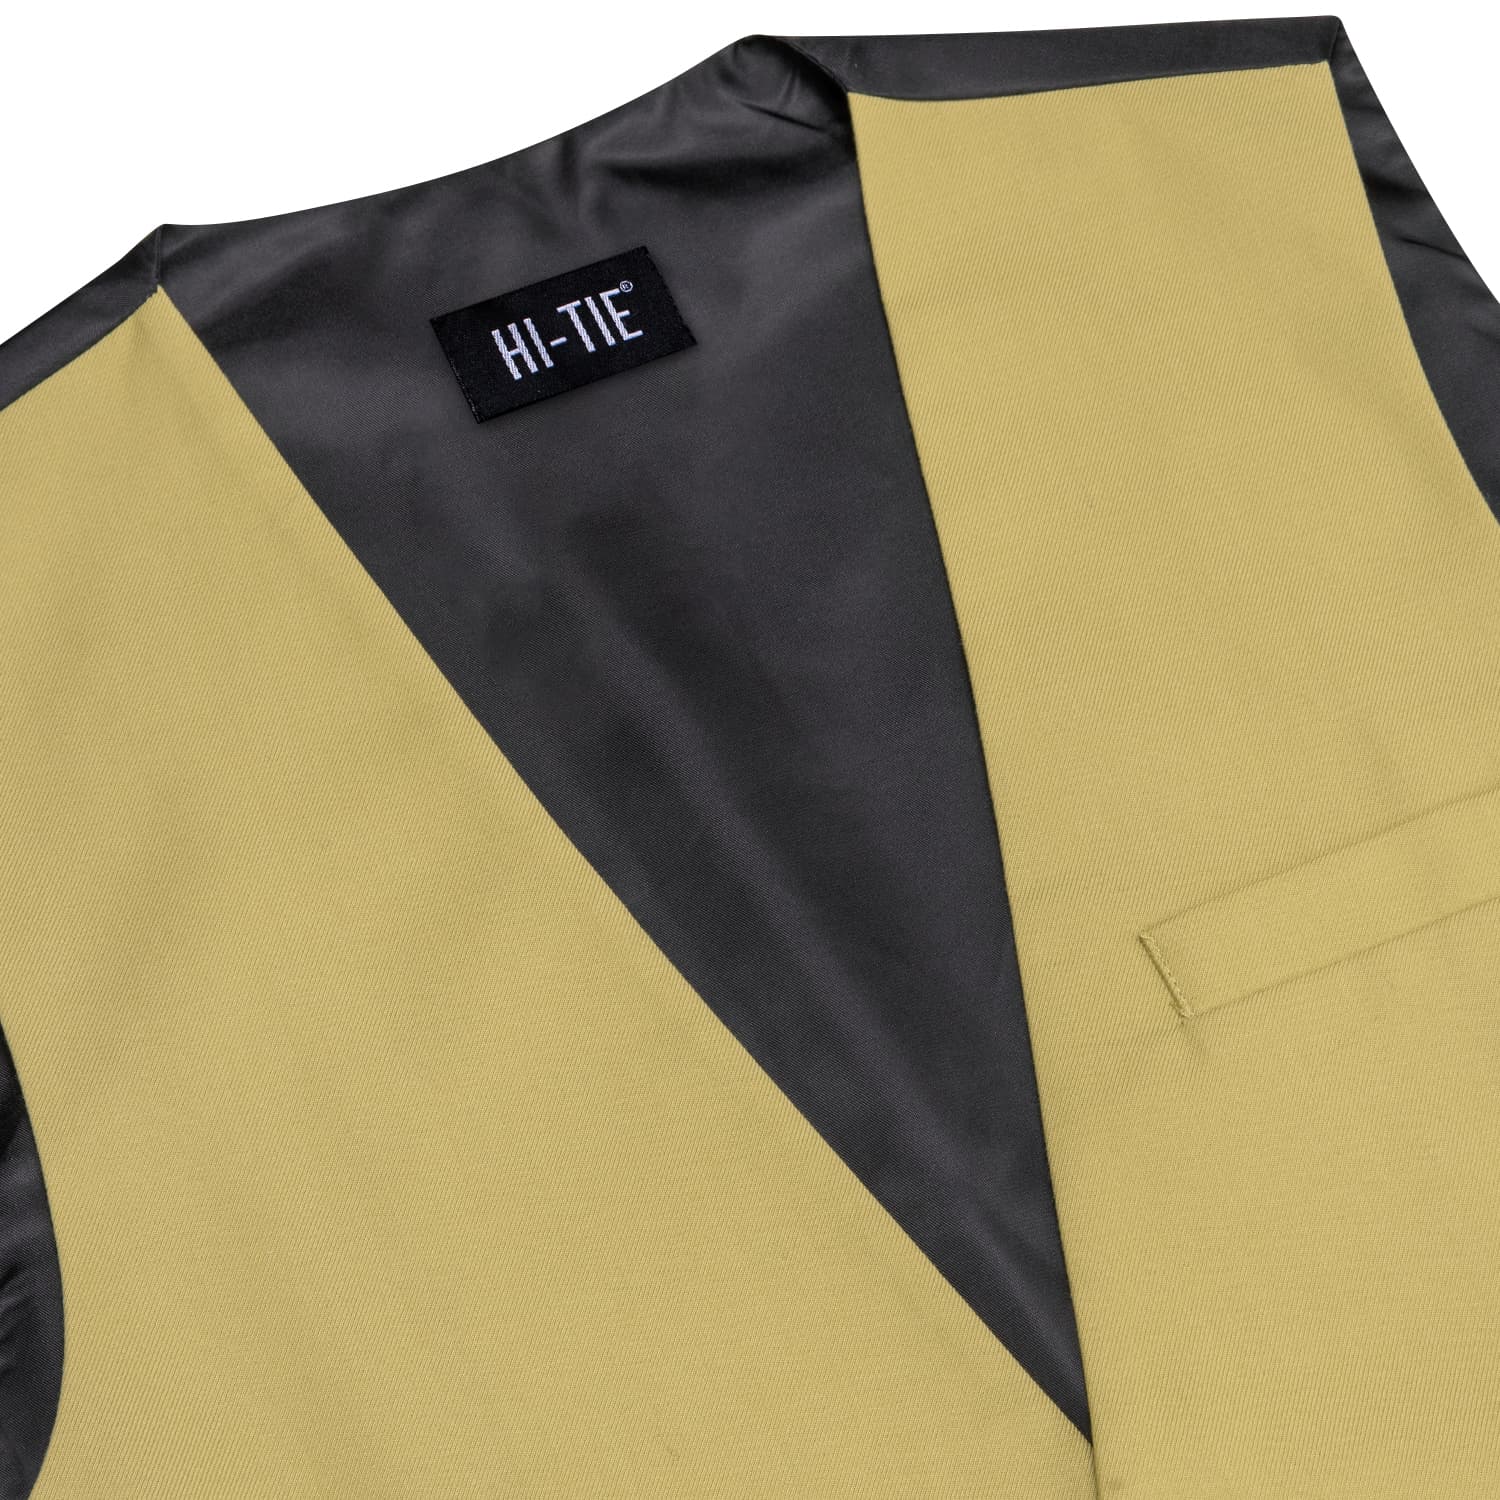 Khaki Solid V-Neck Waistcoat Formal Mens Vest for Business